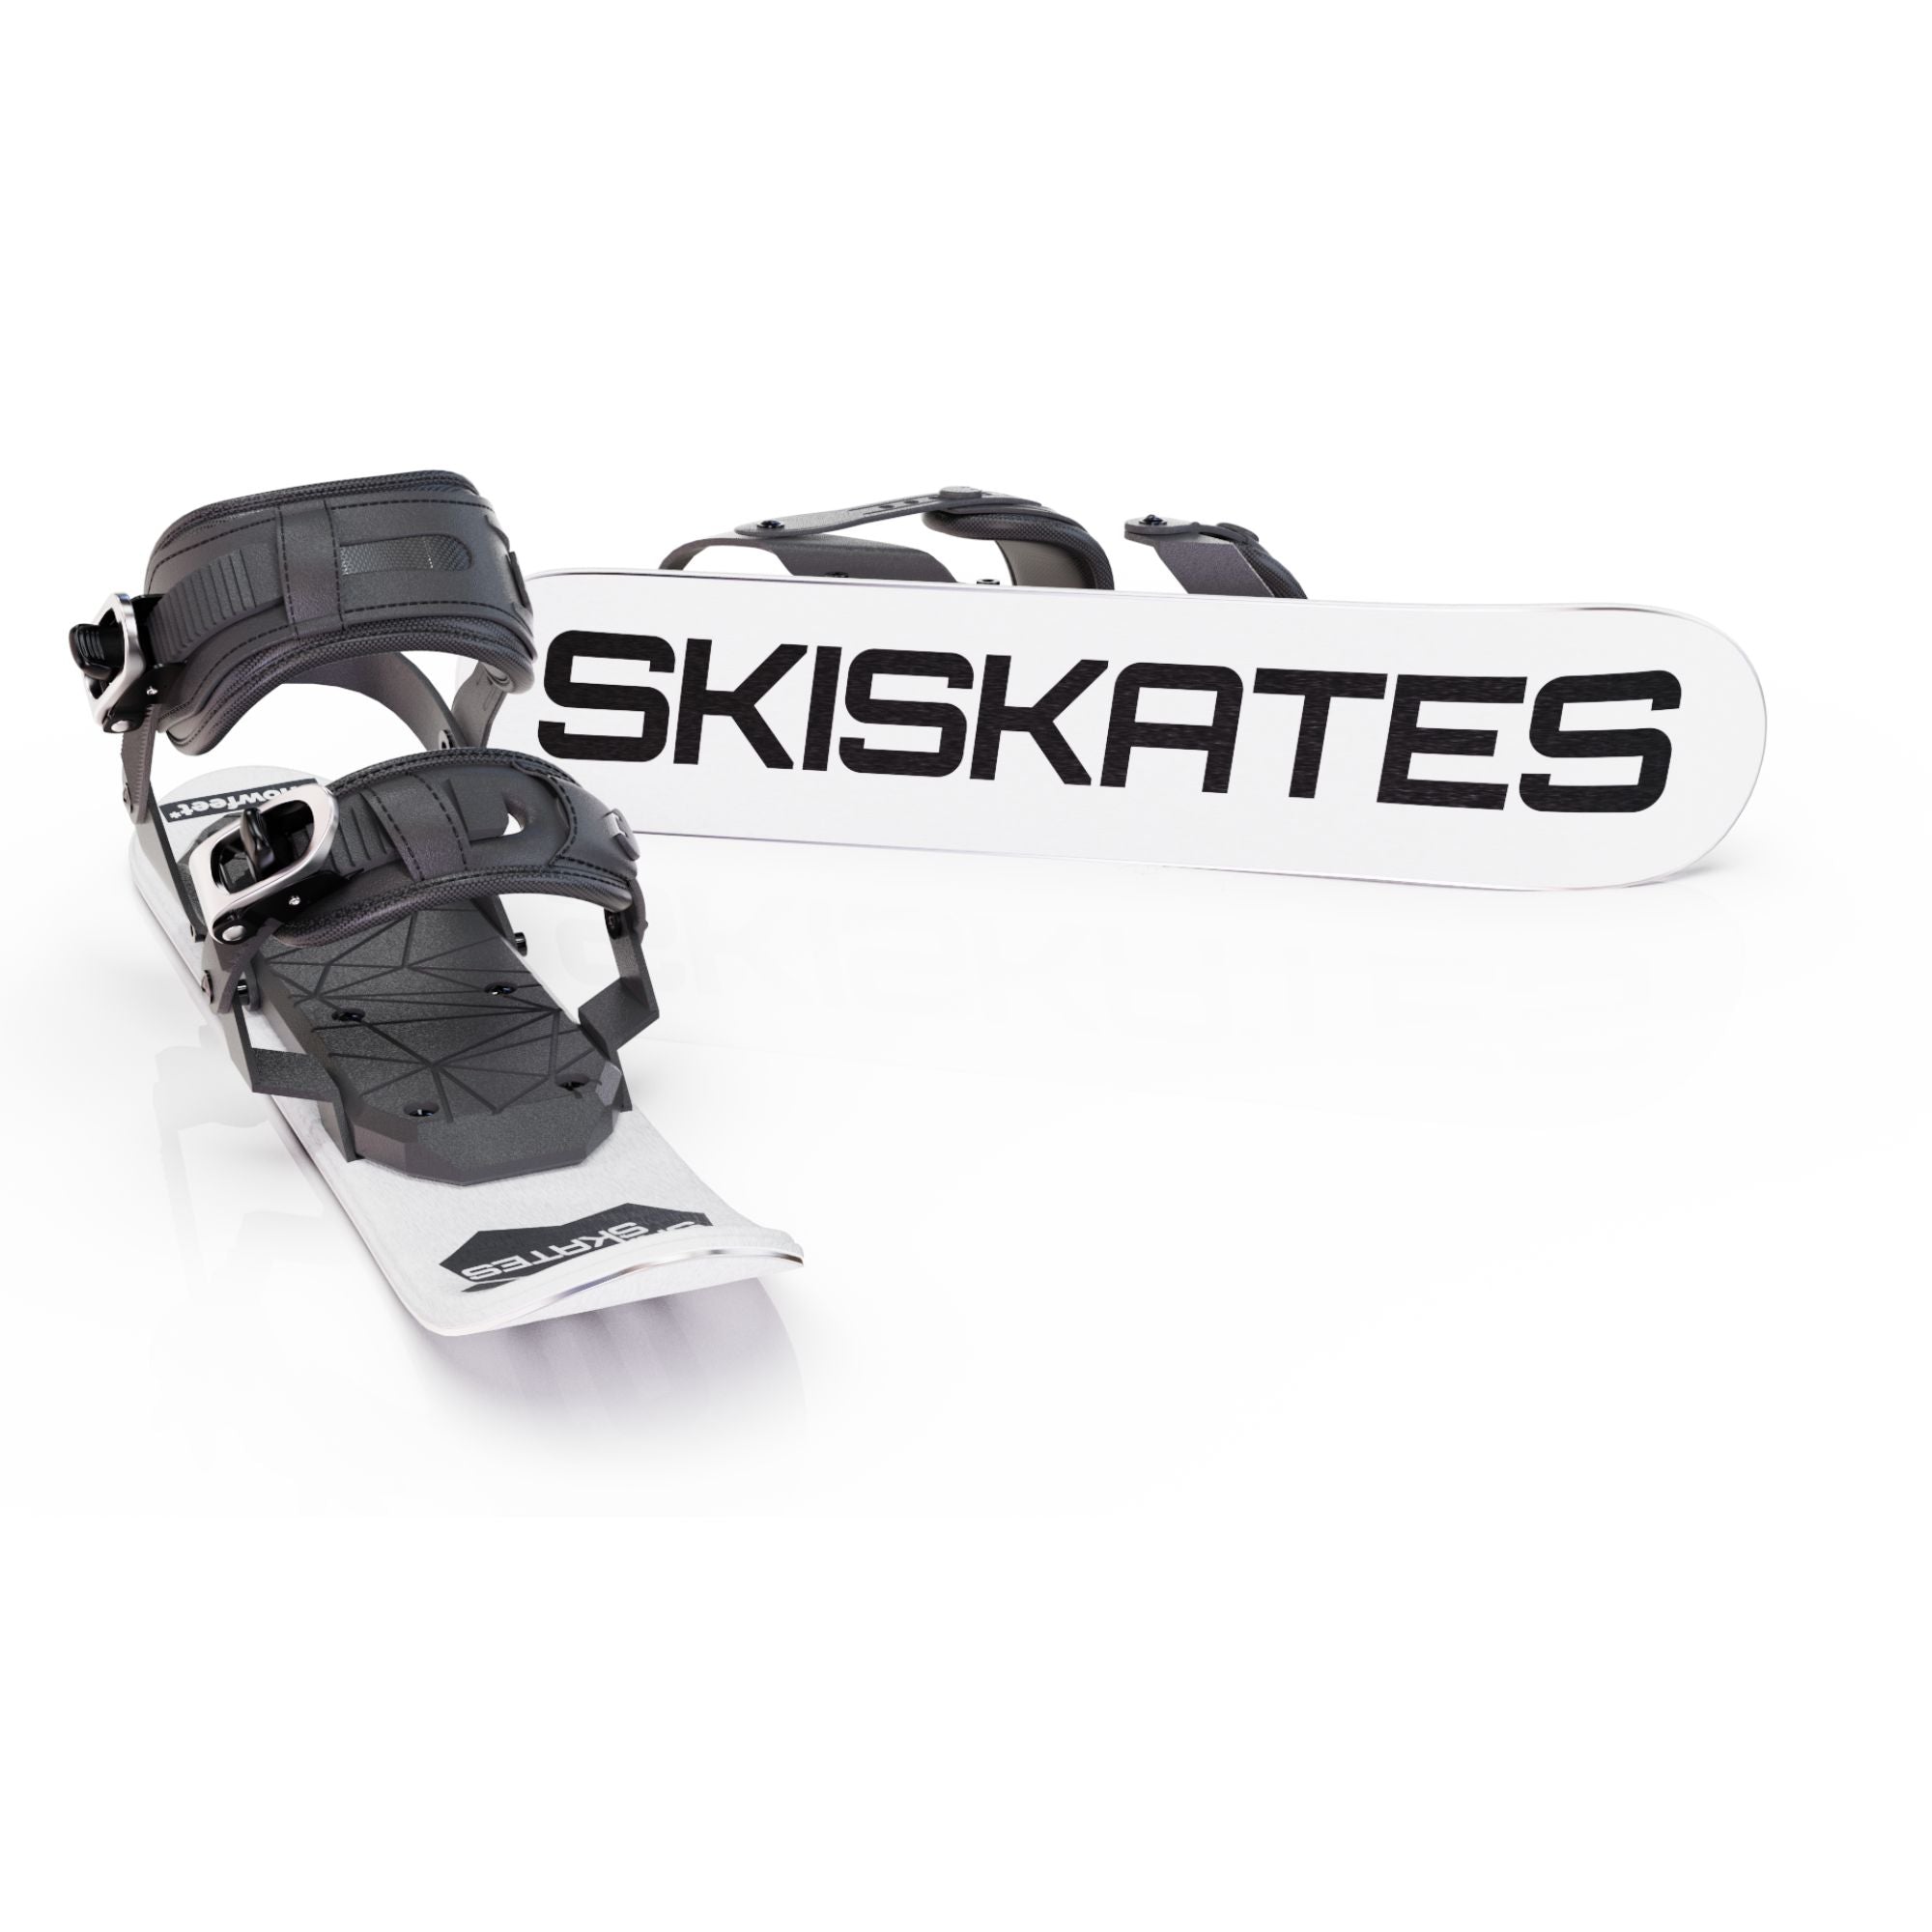 skiskates snowfeet miniski shortski shortestski snowboard boots bindings